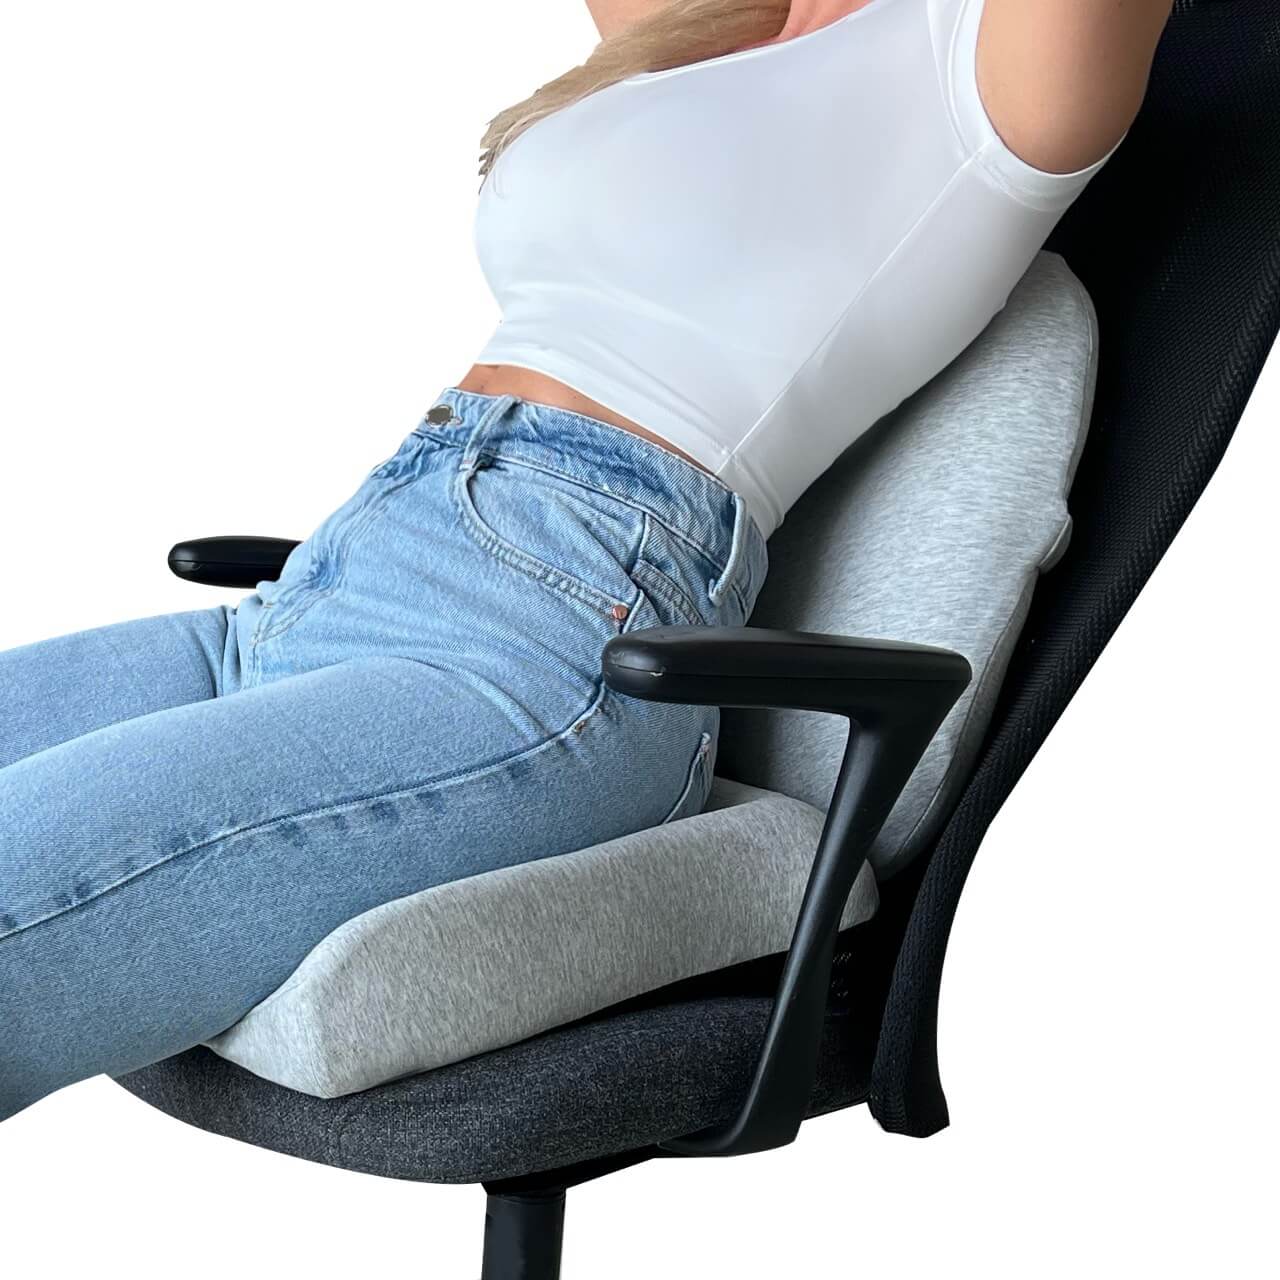 Pain Free Pressure Relief Seat Cushion – versePARIS